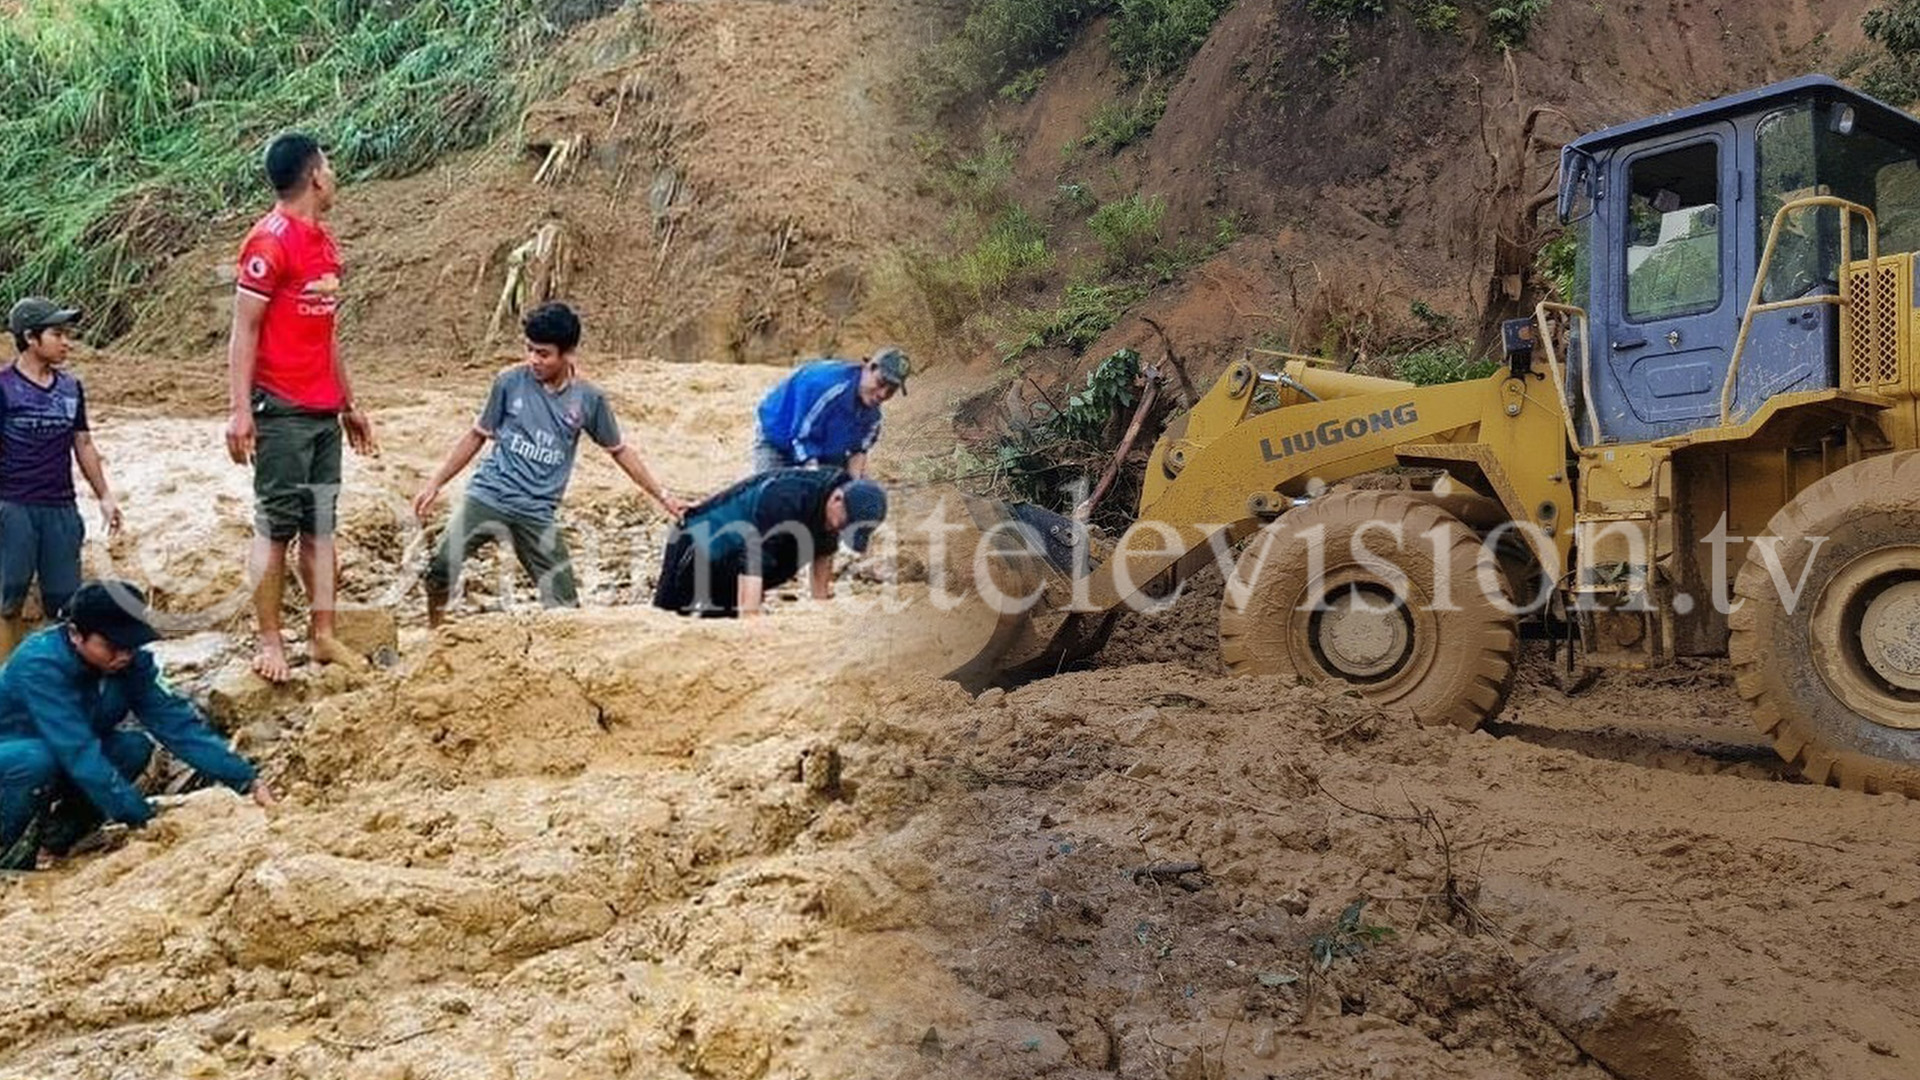 At least 16 people killed in a landslide in central Vietnam